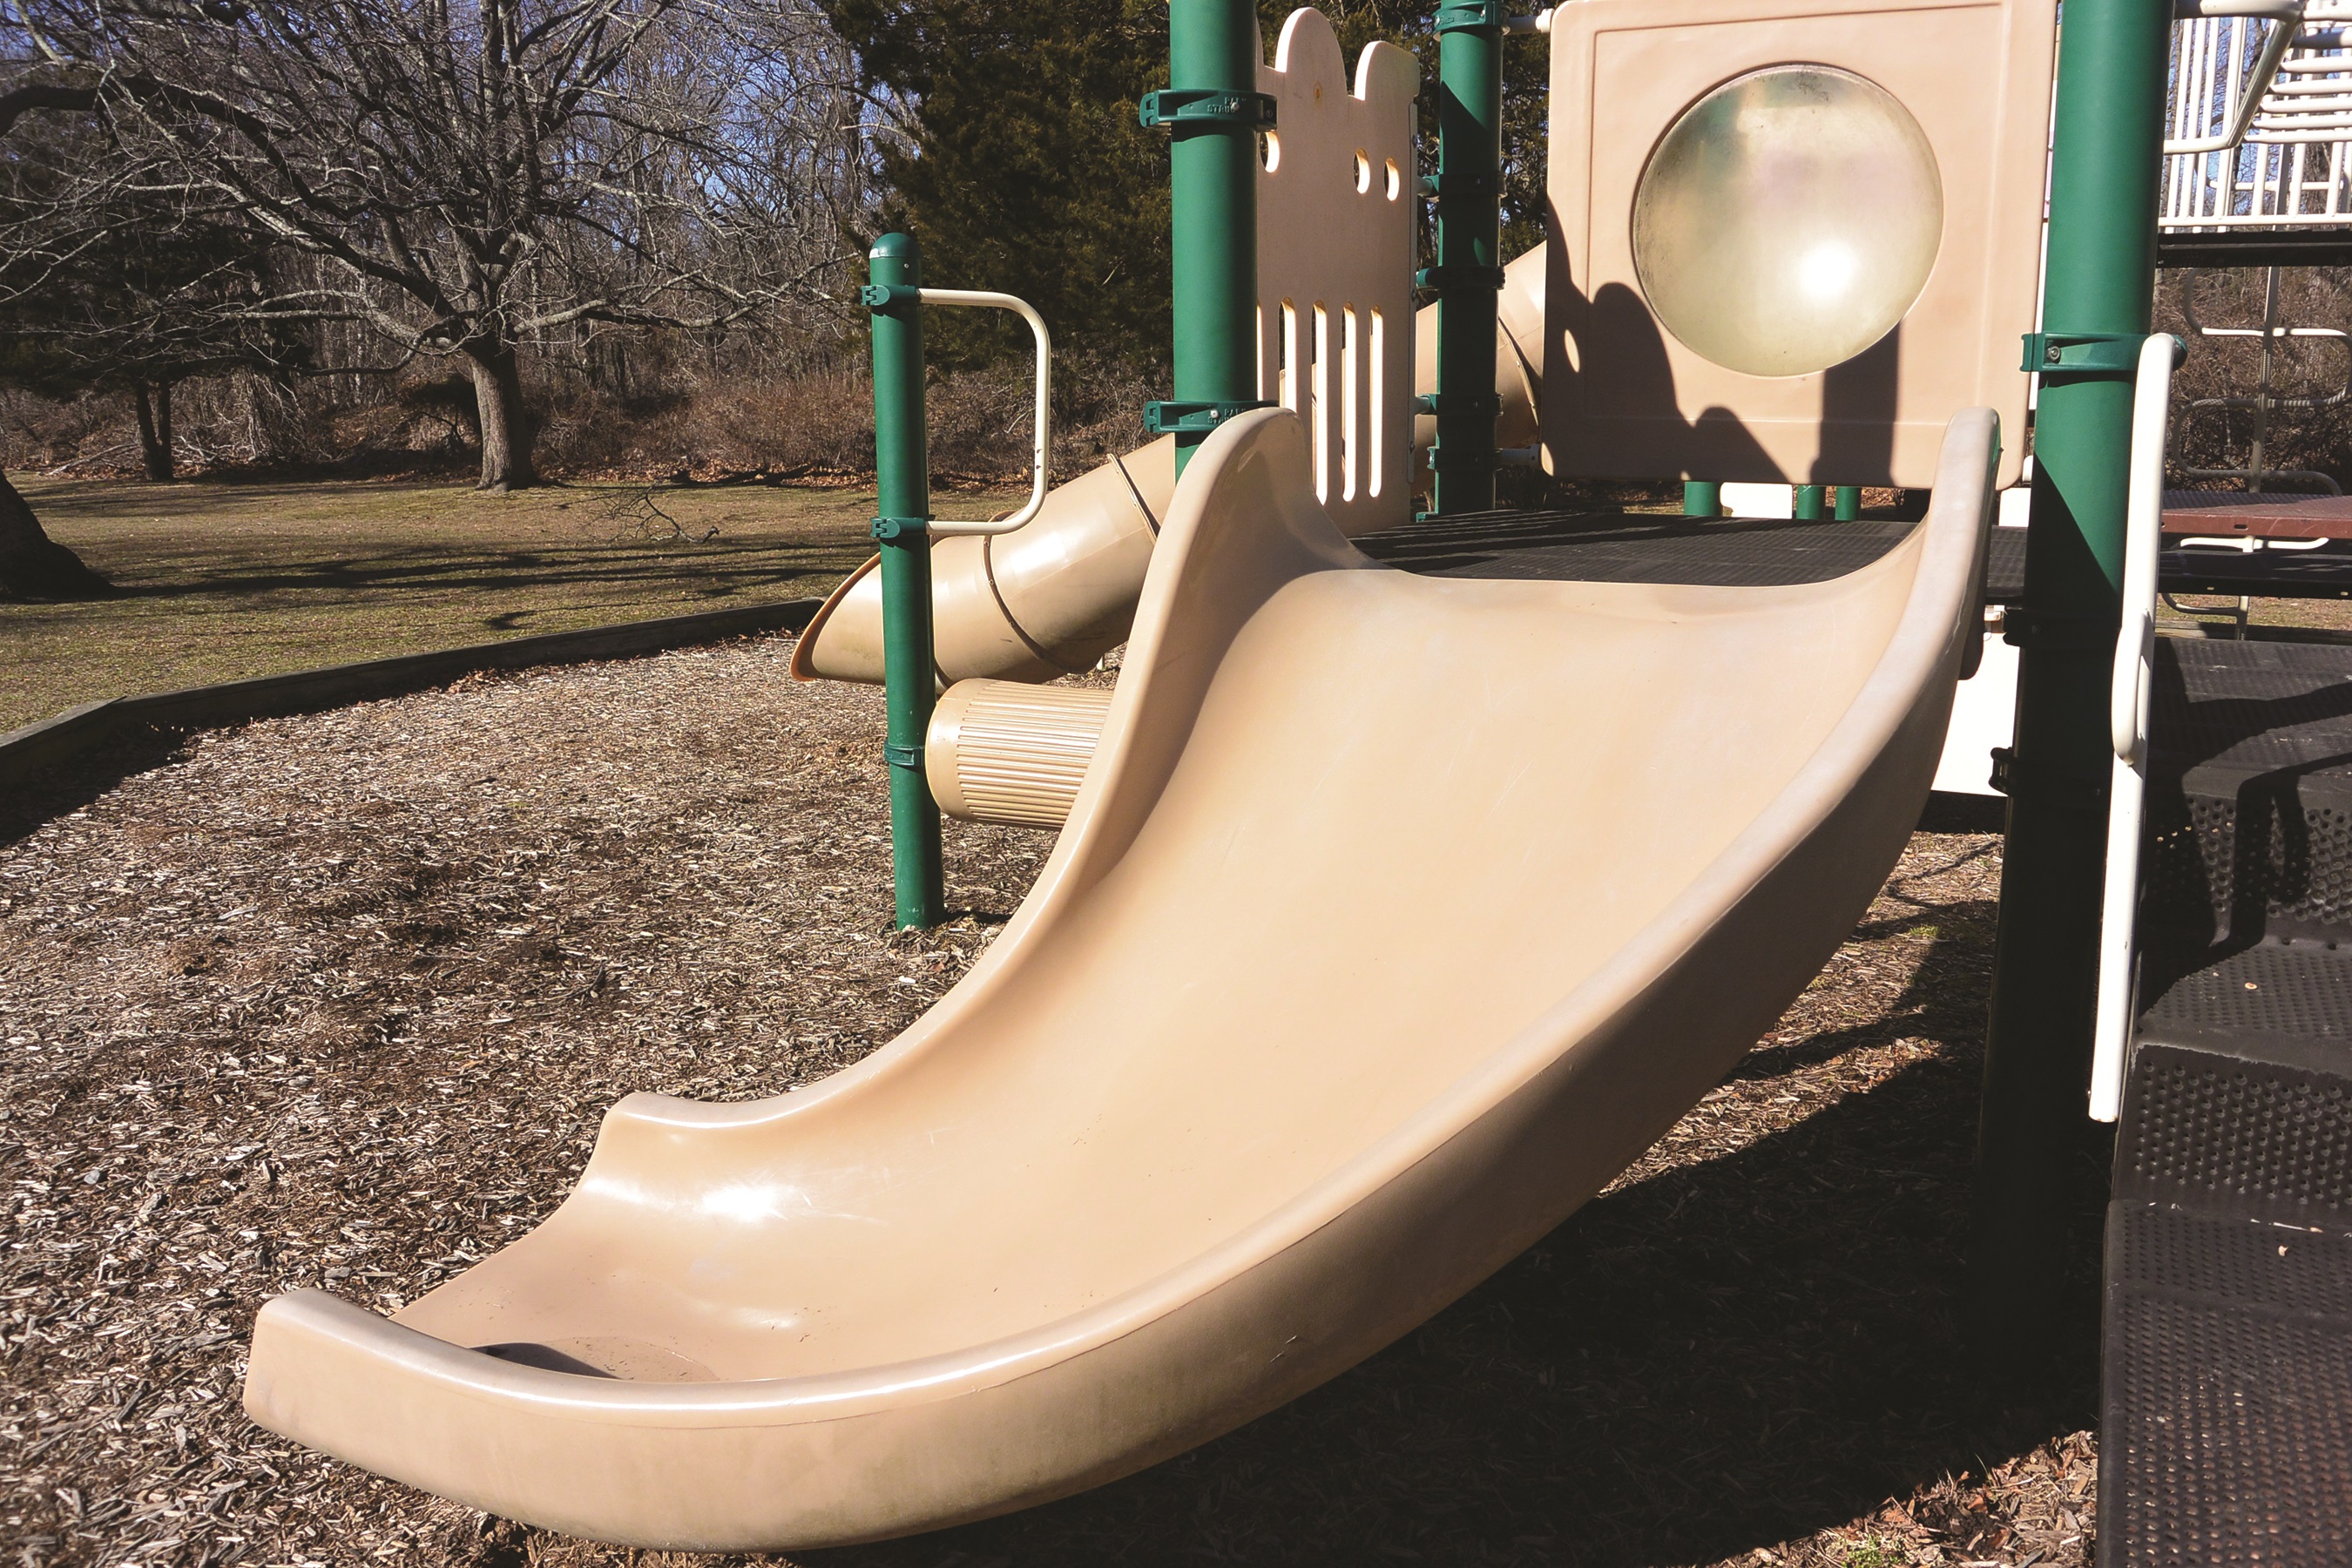 Blydenburgh Park curved slide photo